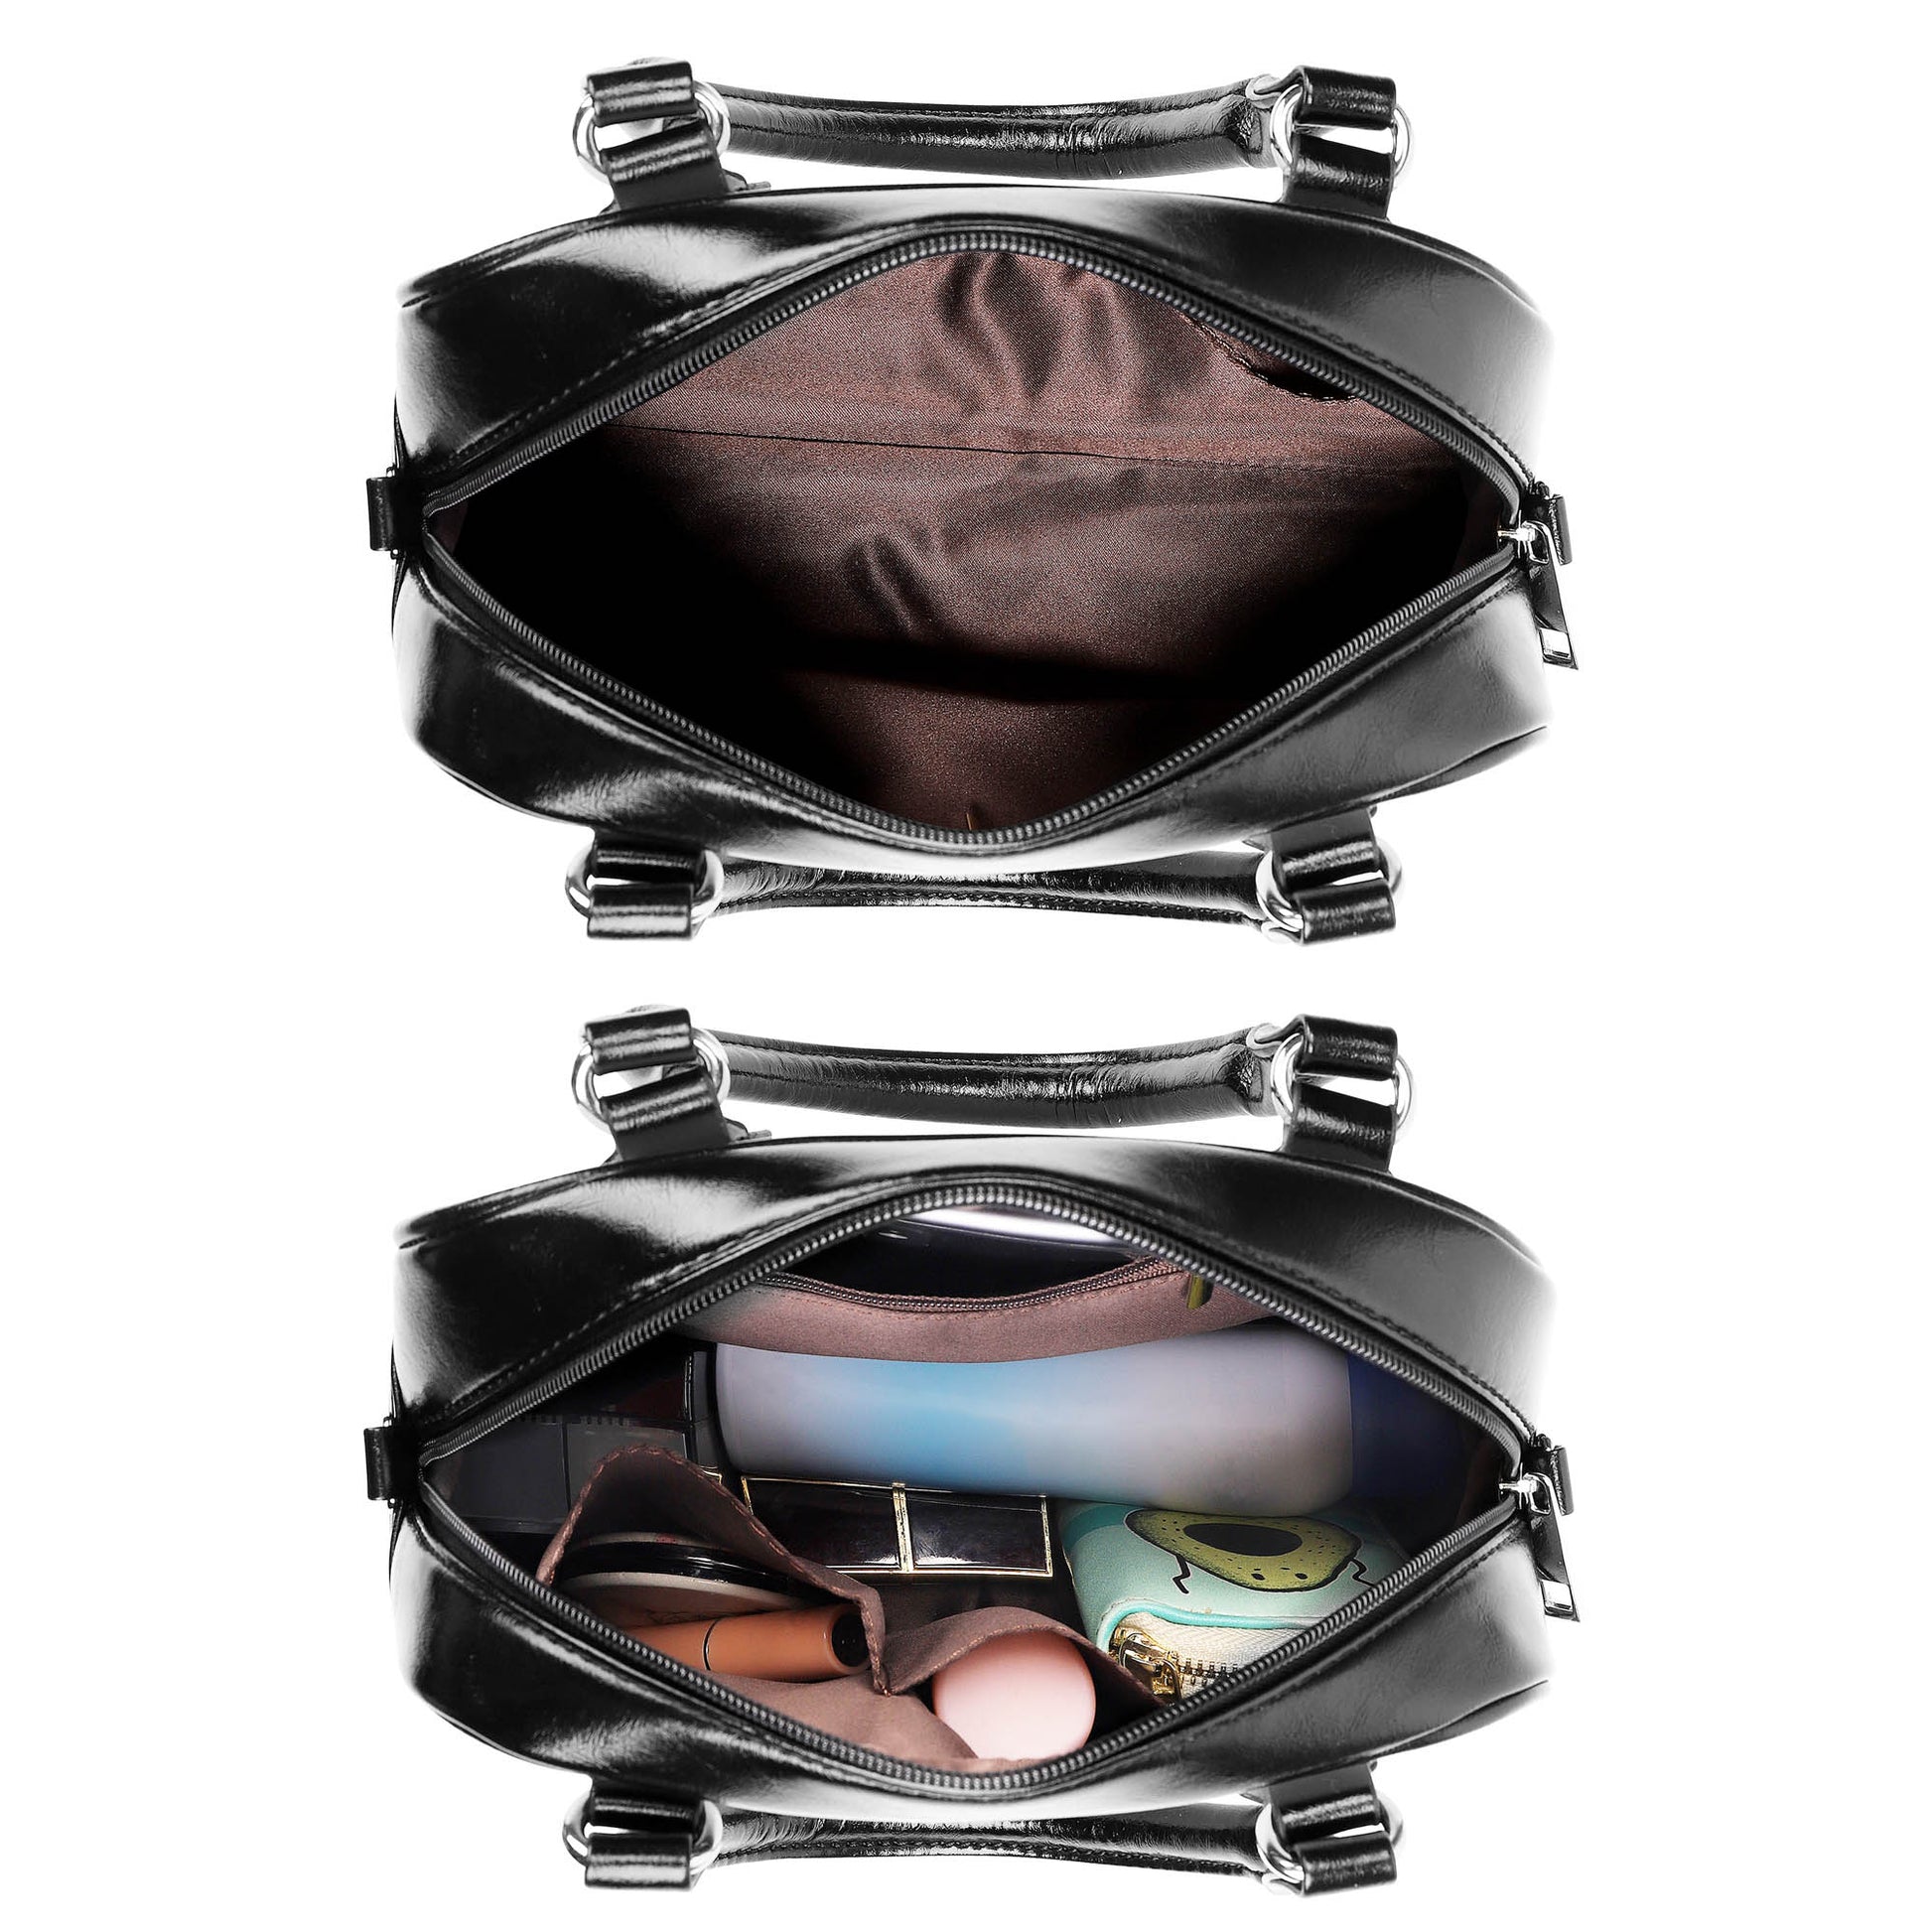 Sutherland Tartan Shoulder Handbags with Family Crest - Tartanvibesclothing